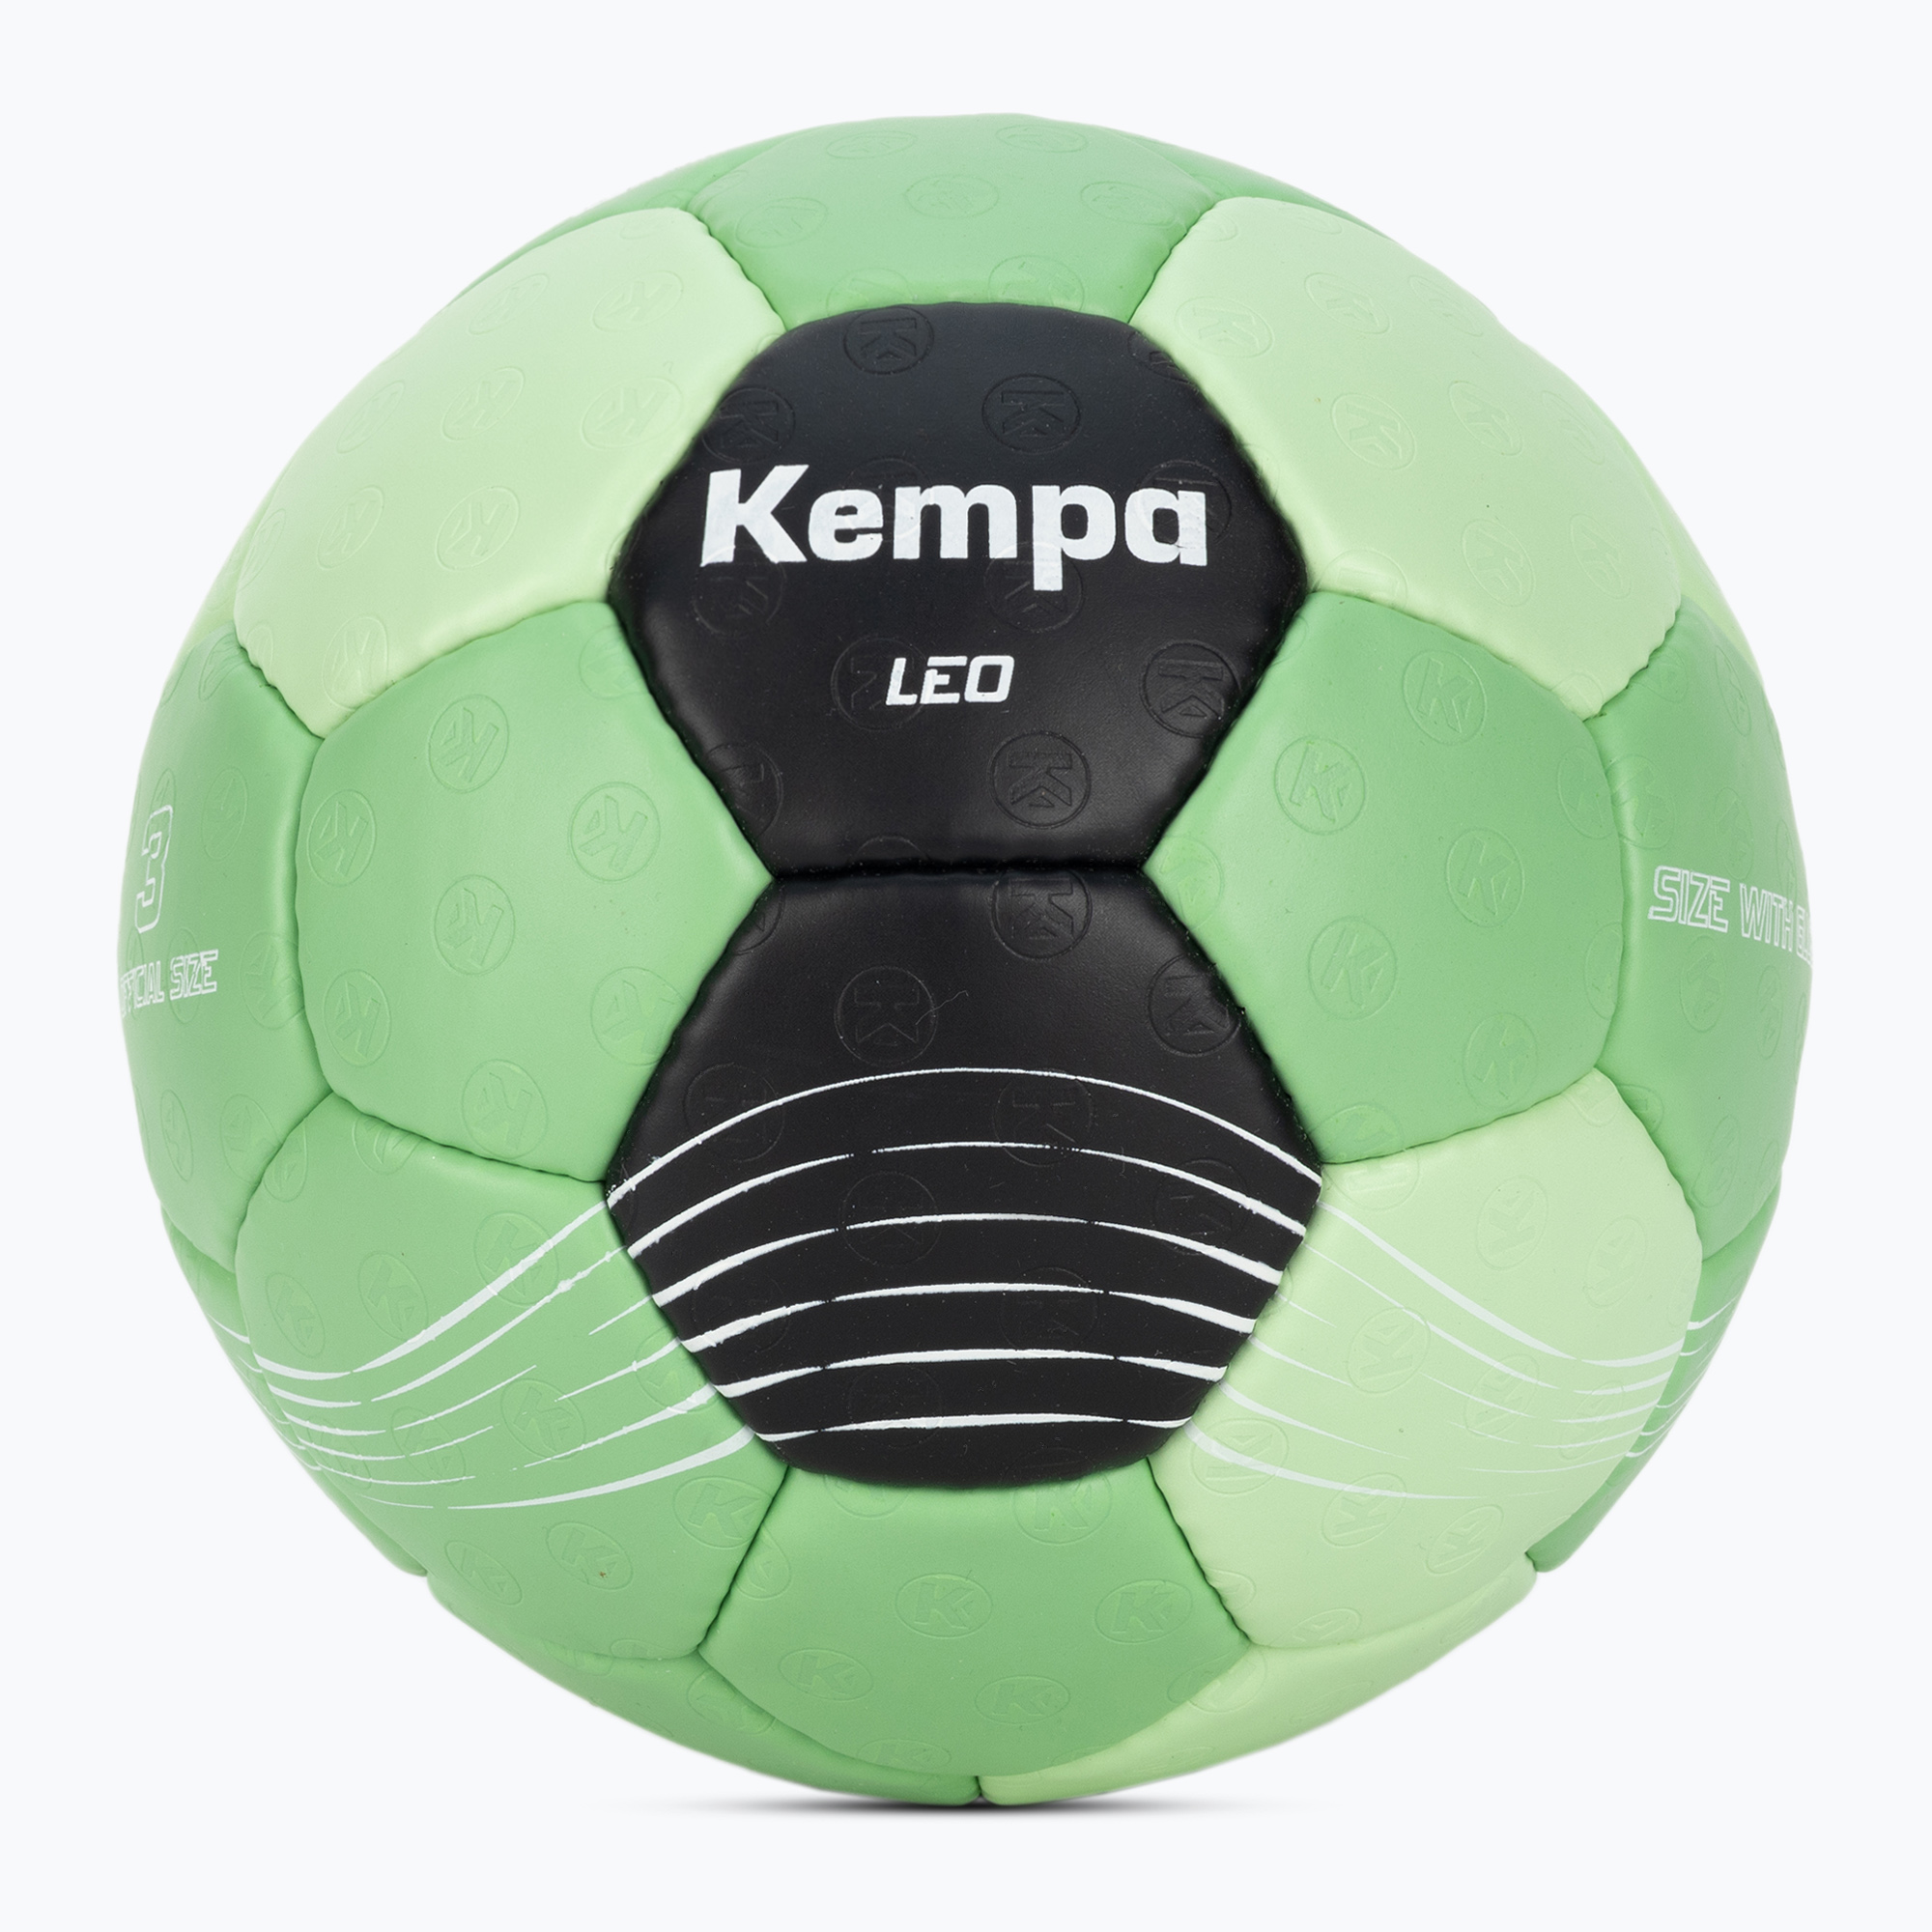 Kempa Leo handbal 200190701/3 mărimea 3